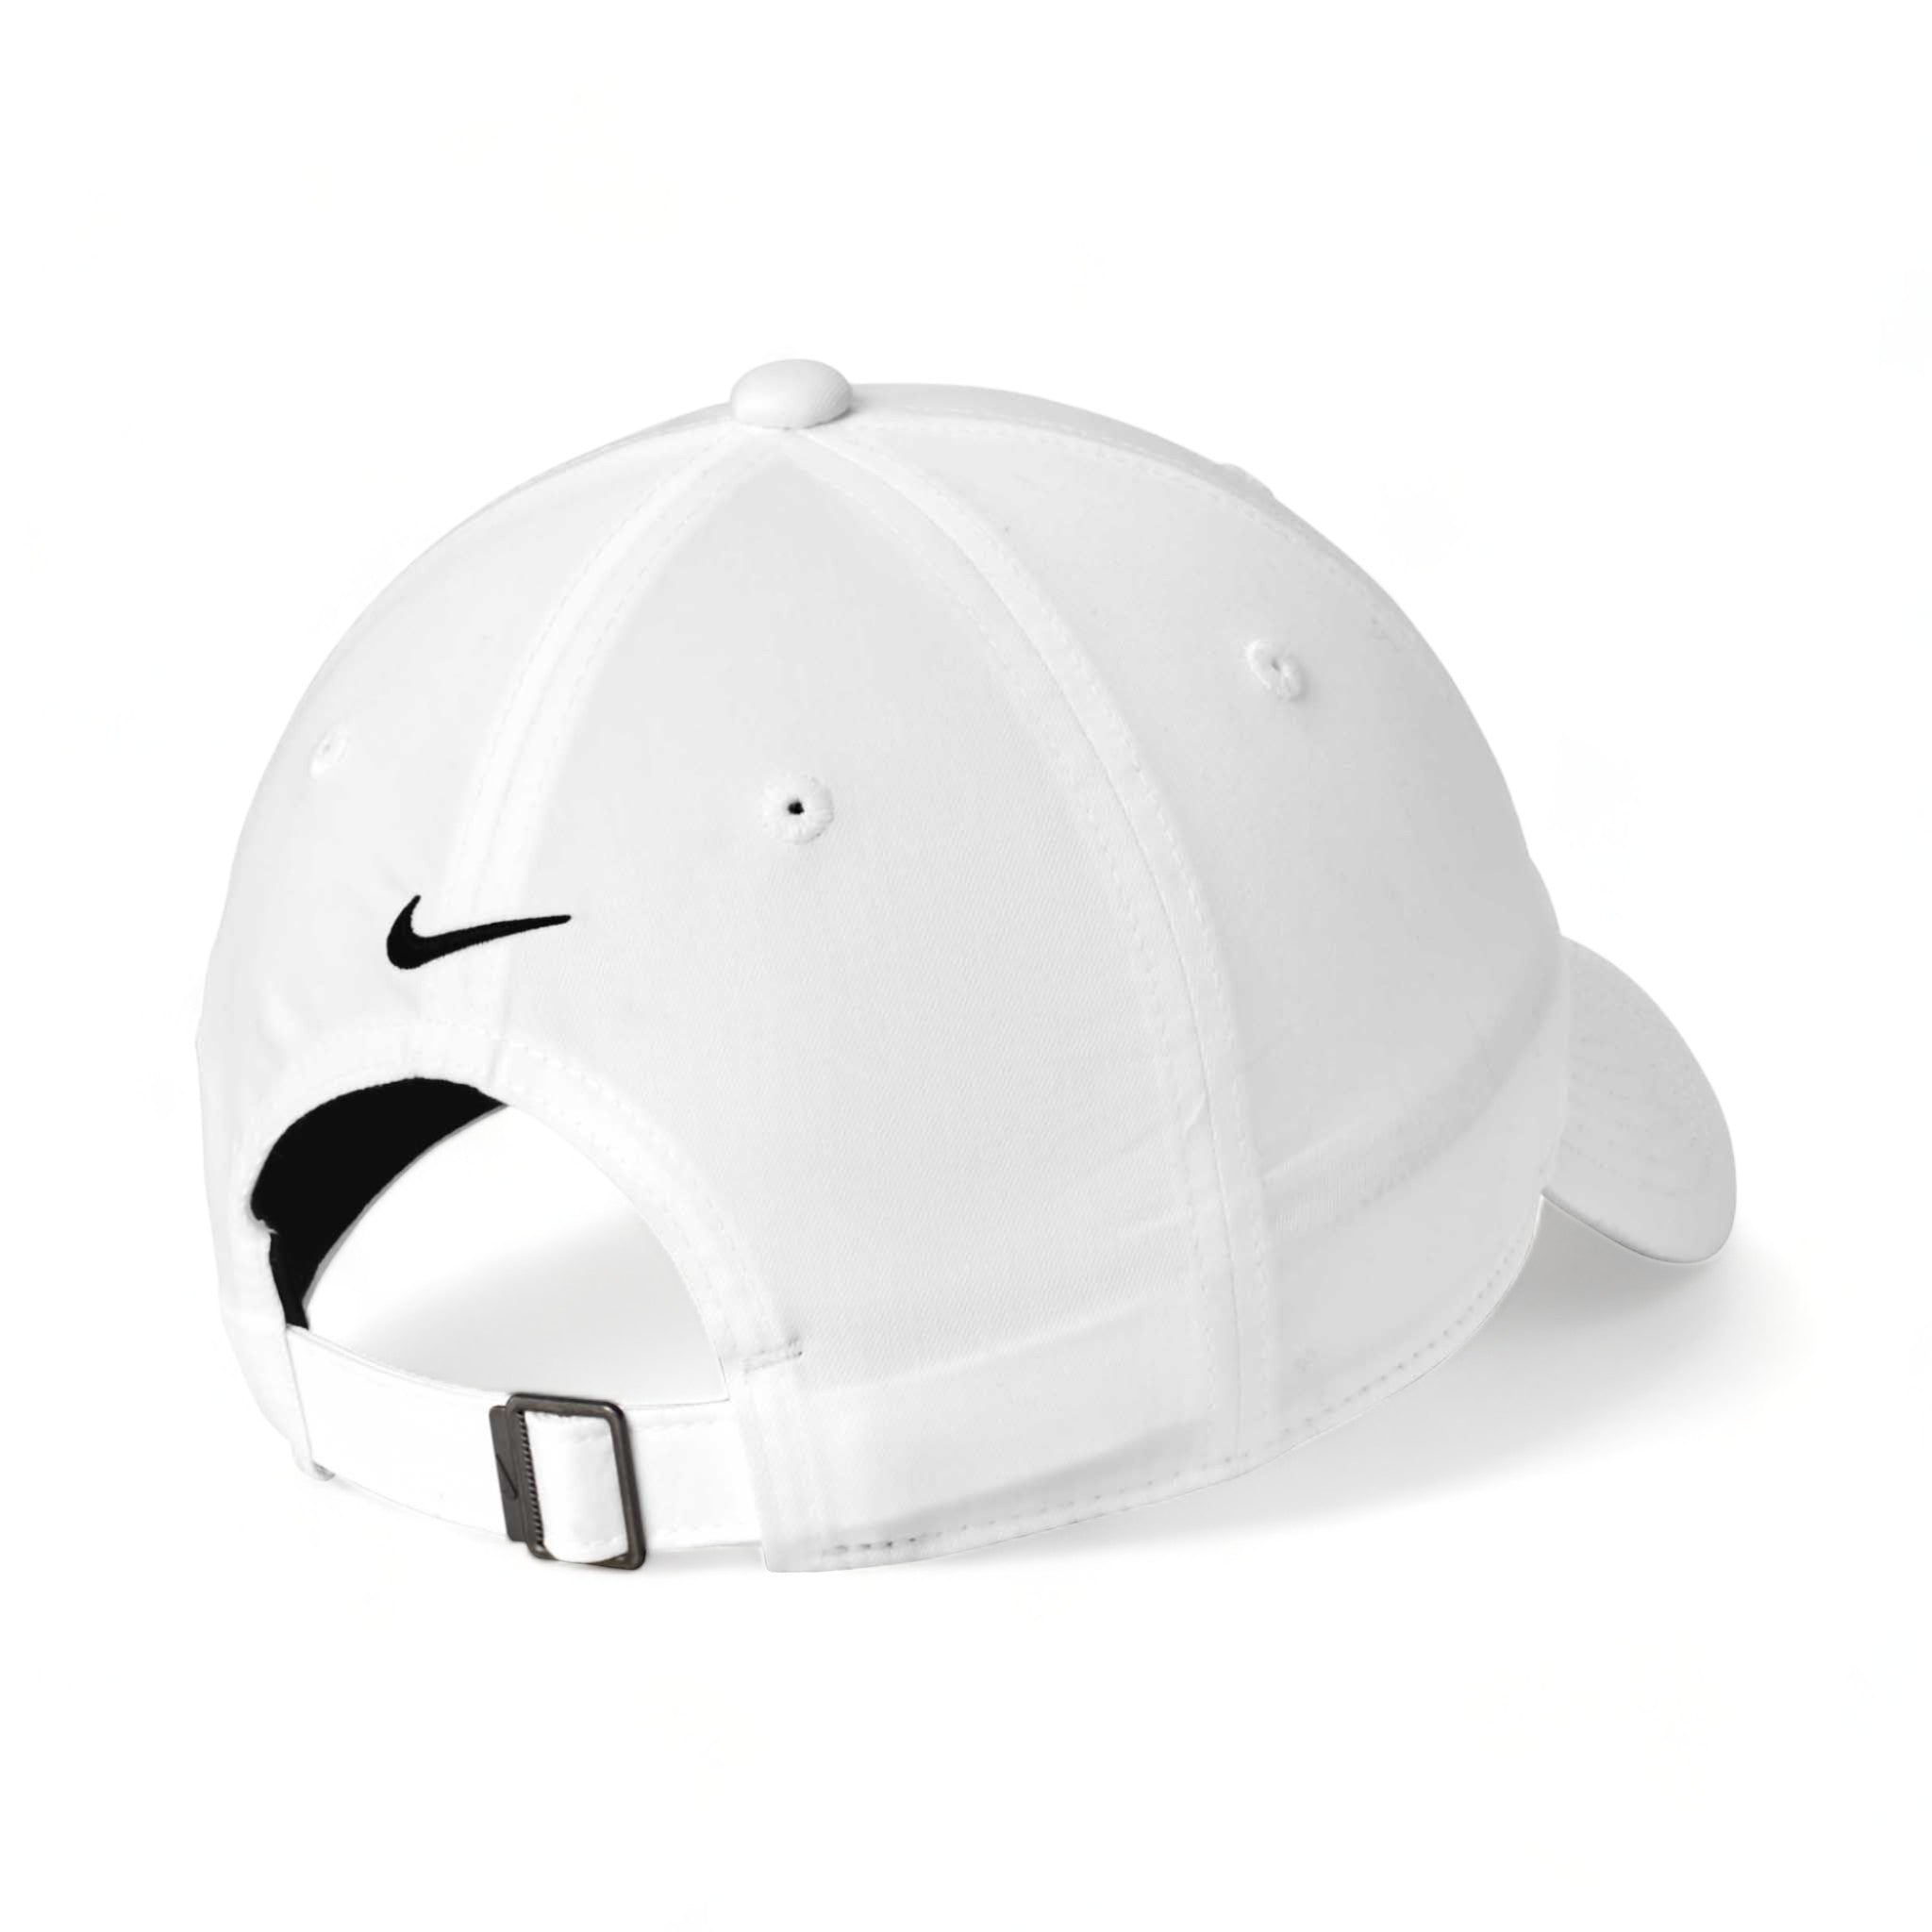 Back view of Nike NKFB6449 custom hat in white